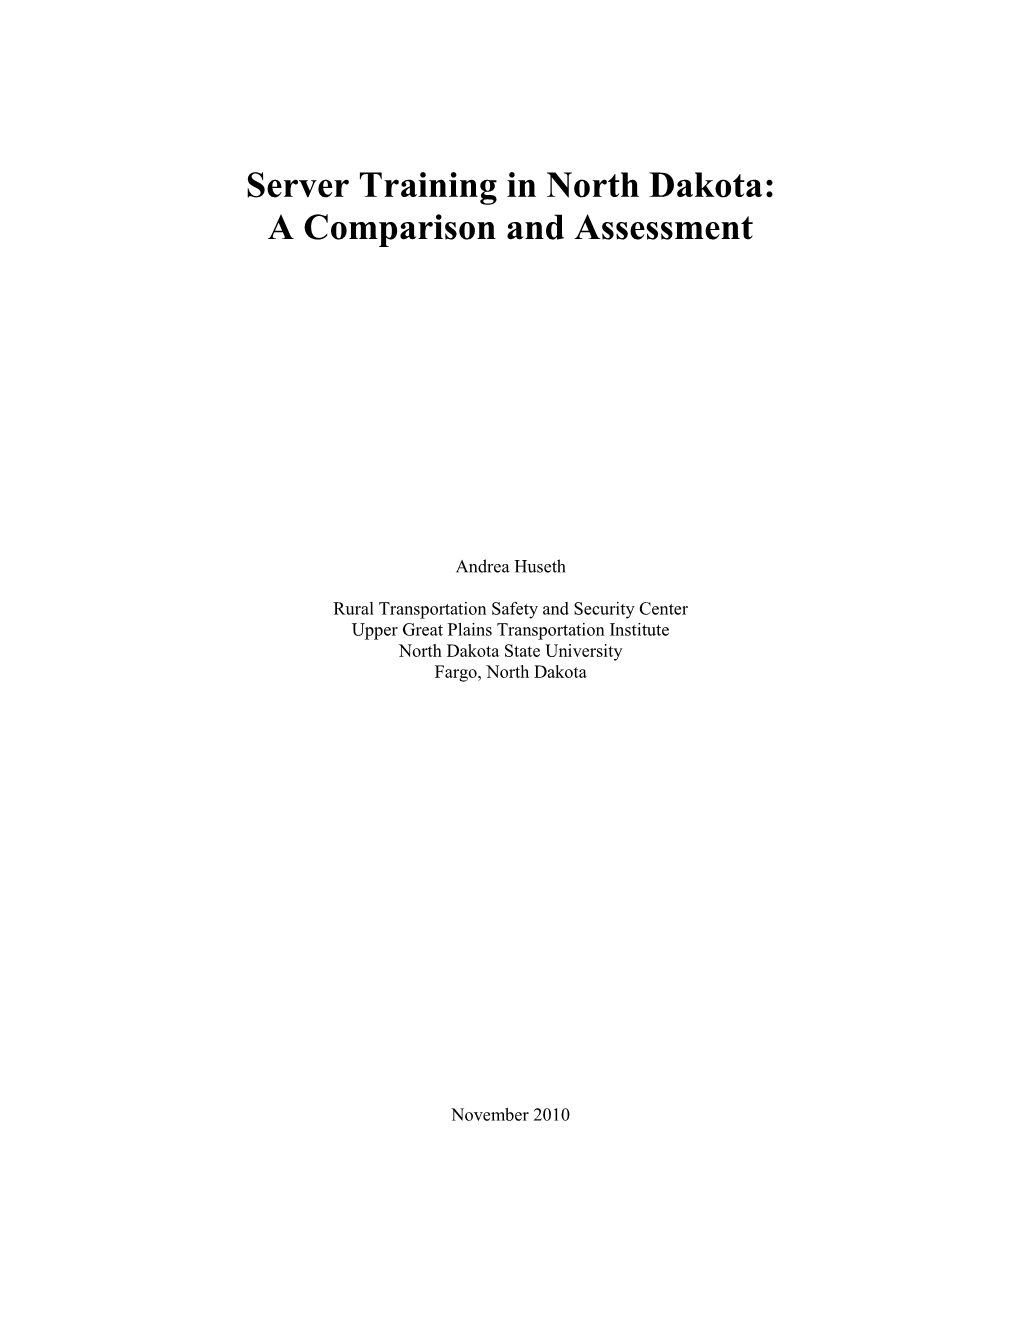 Server Training in North Dakota: a Comparison and Assessment